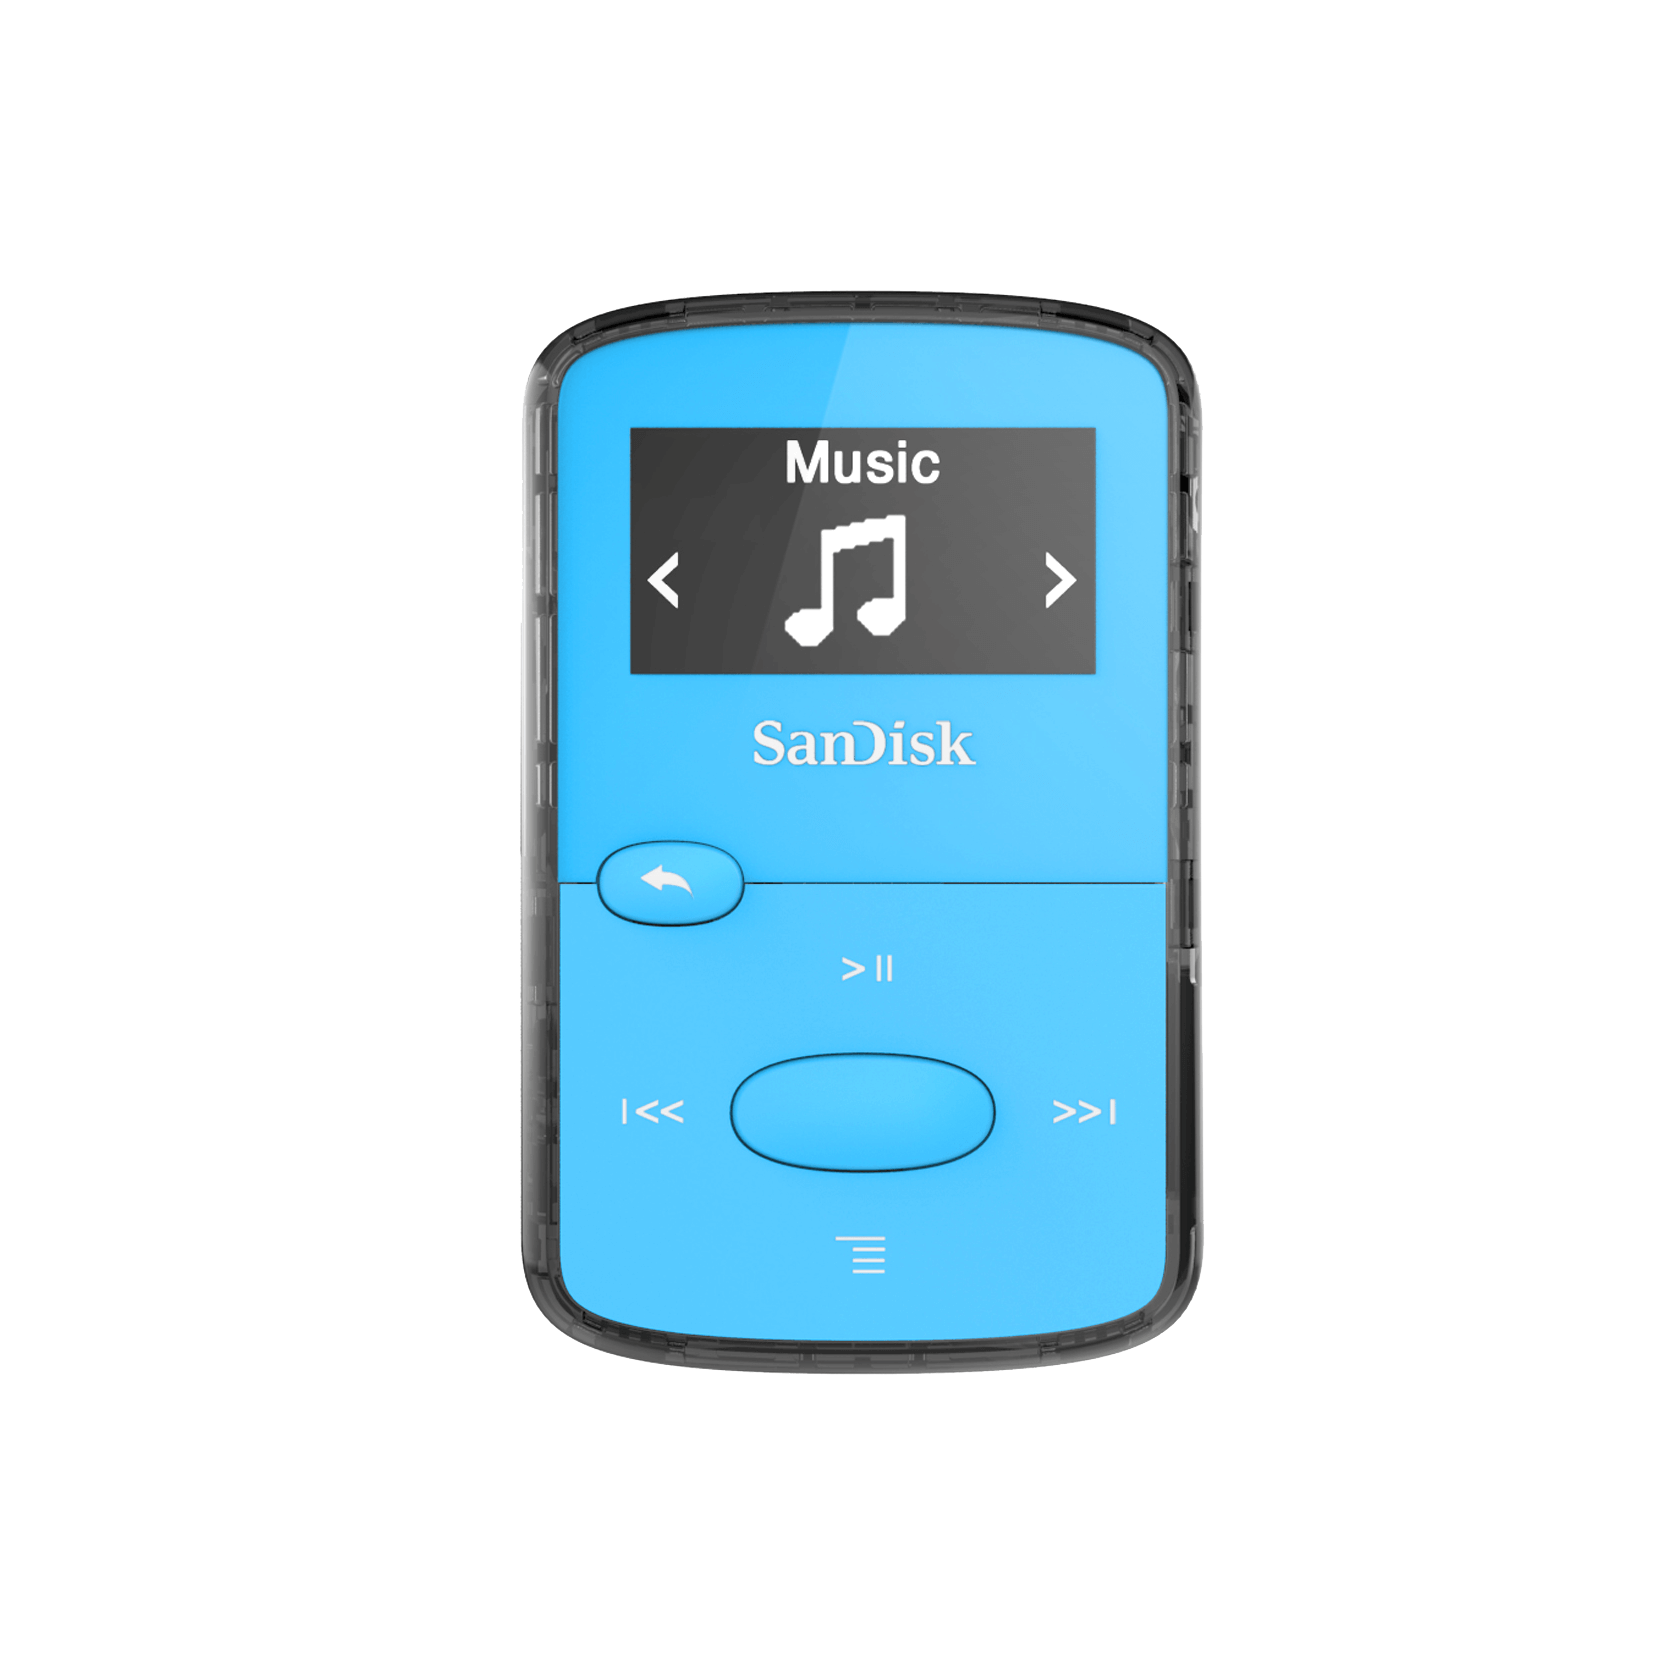 Sandisk Clip Jam Mp3 Player